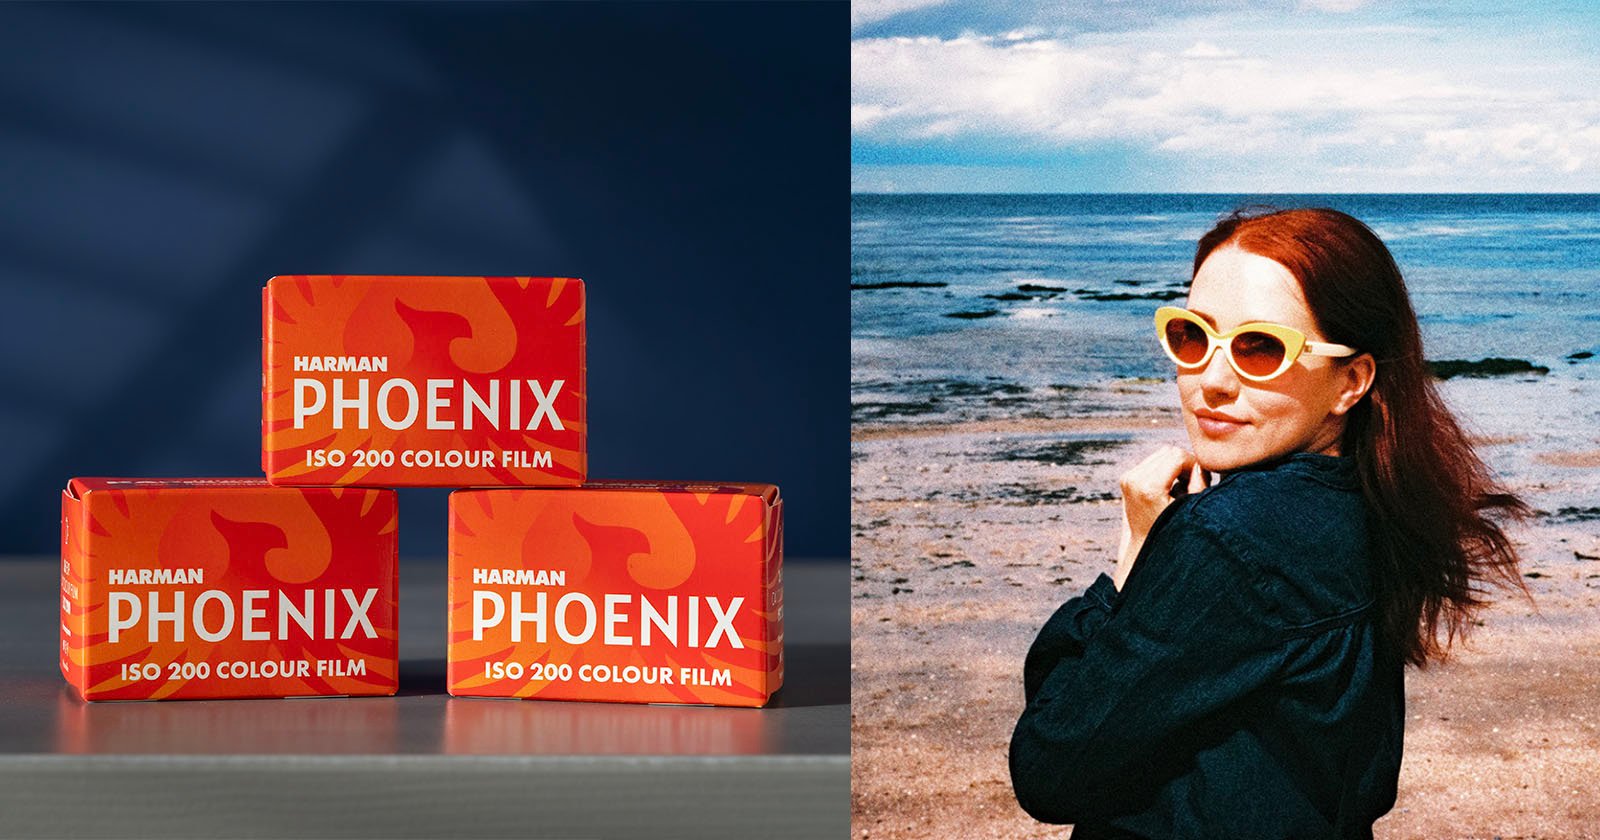  harman photo brand film called phoenix 200 